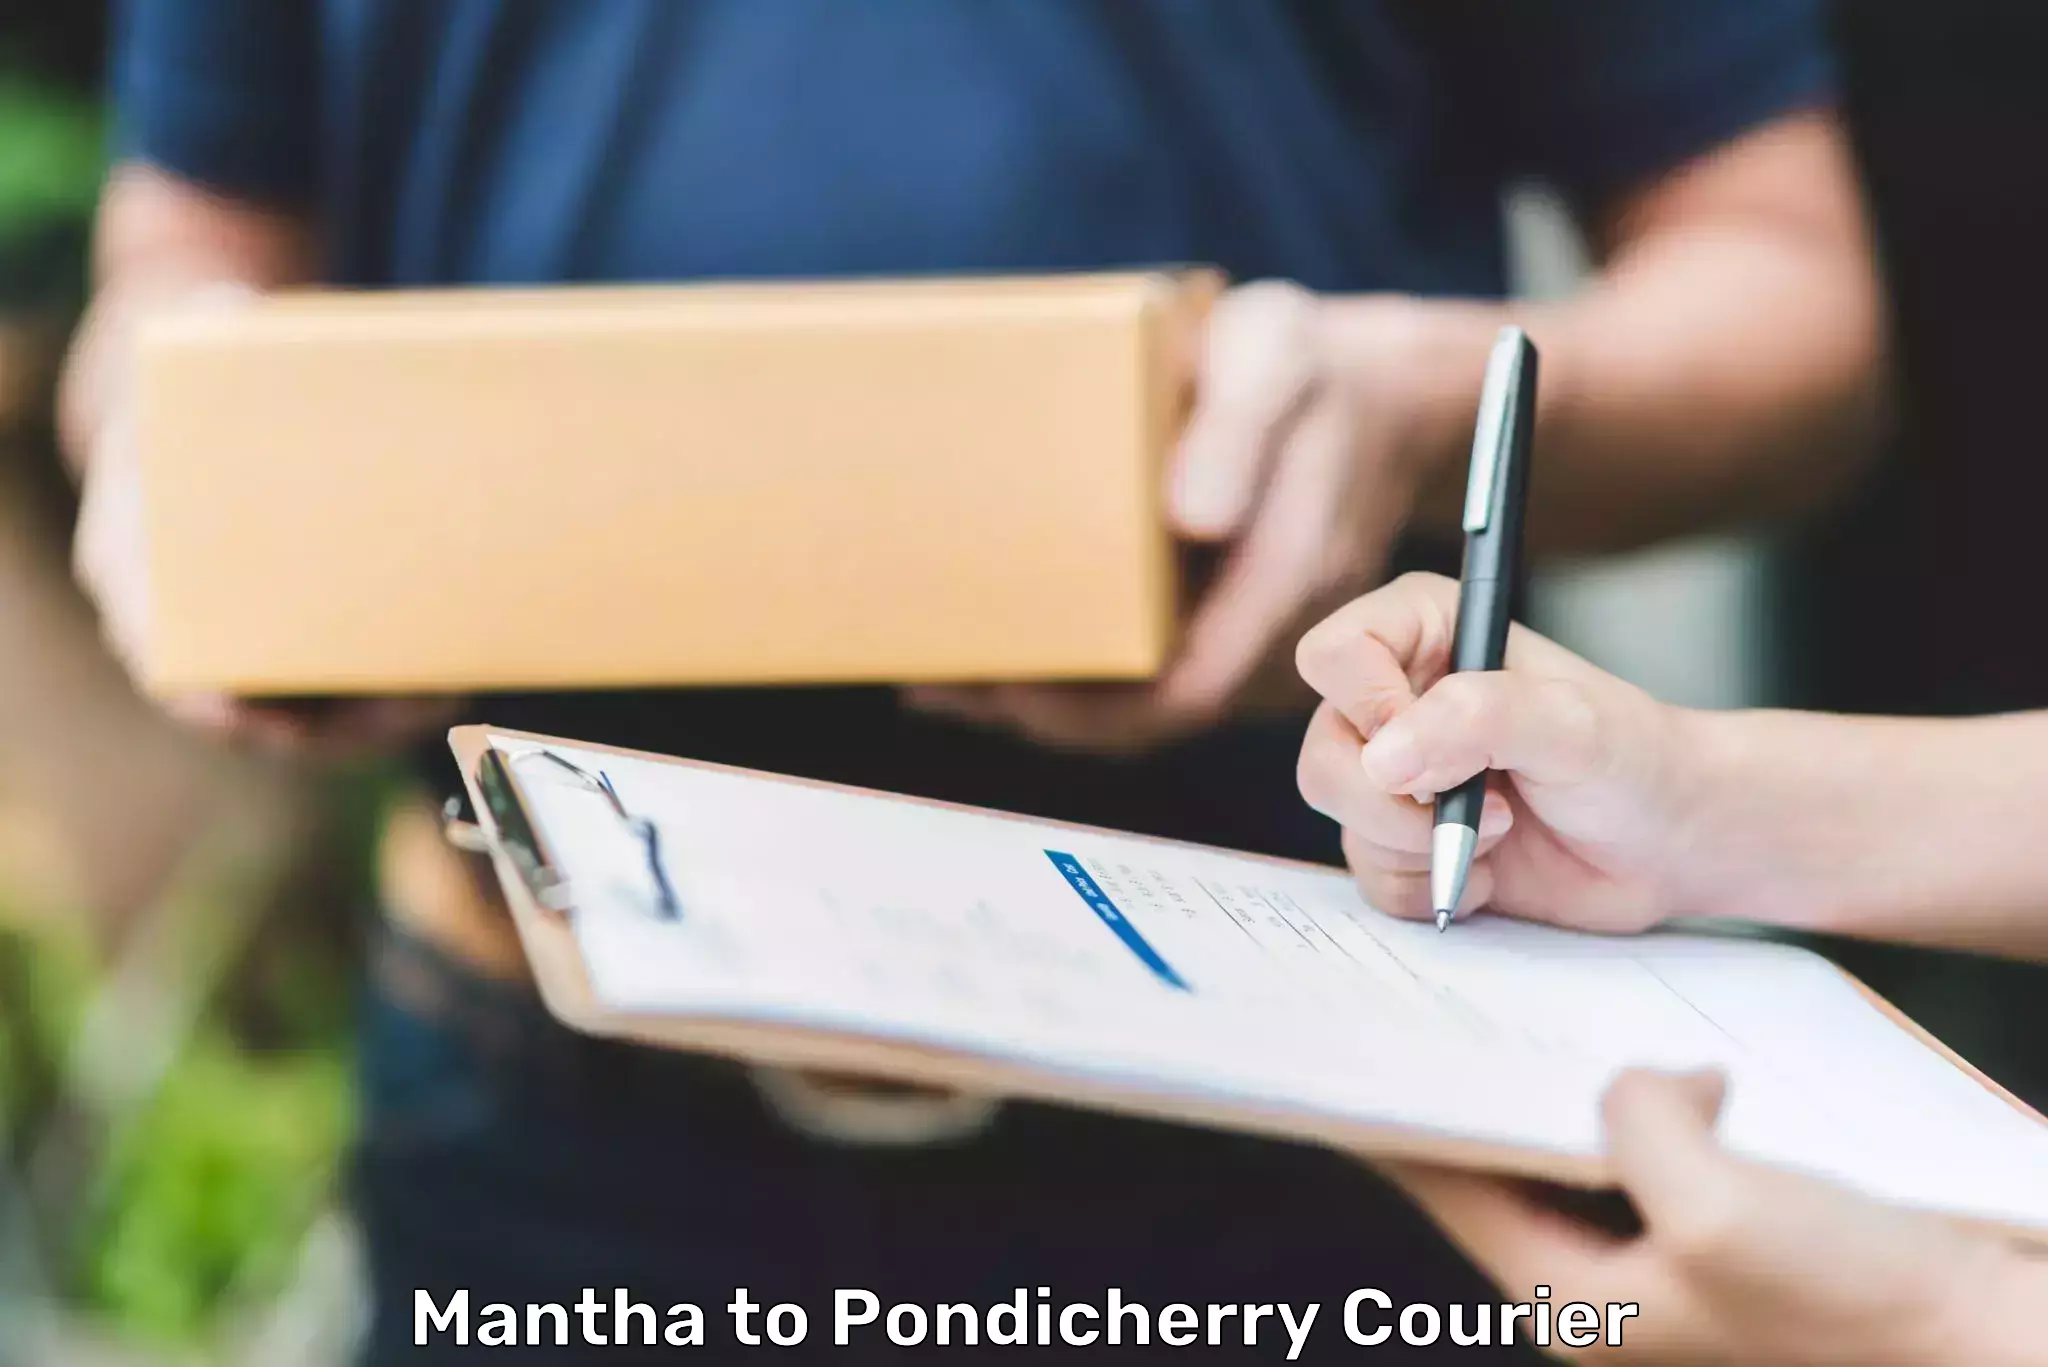 Courier service innovation Mantha to Pondicherry